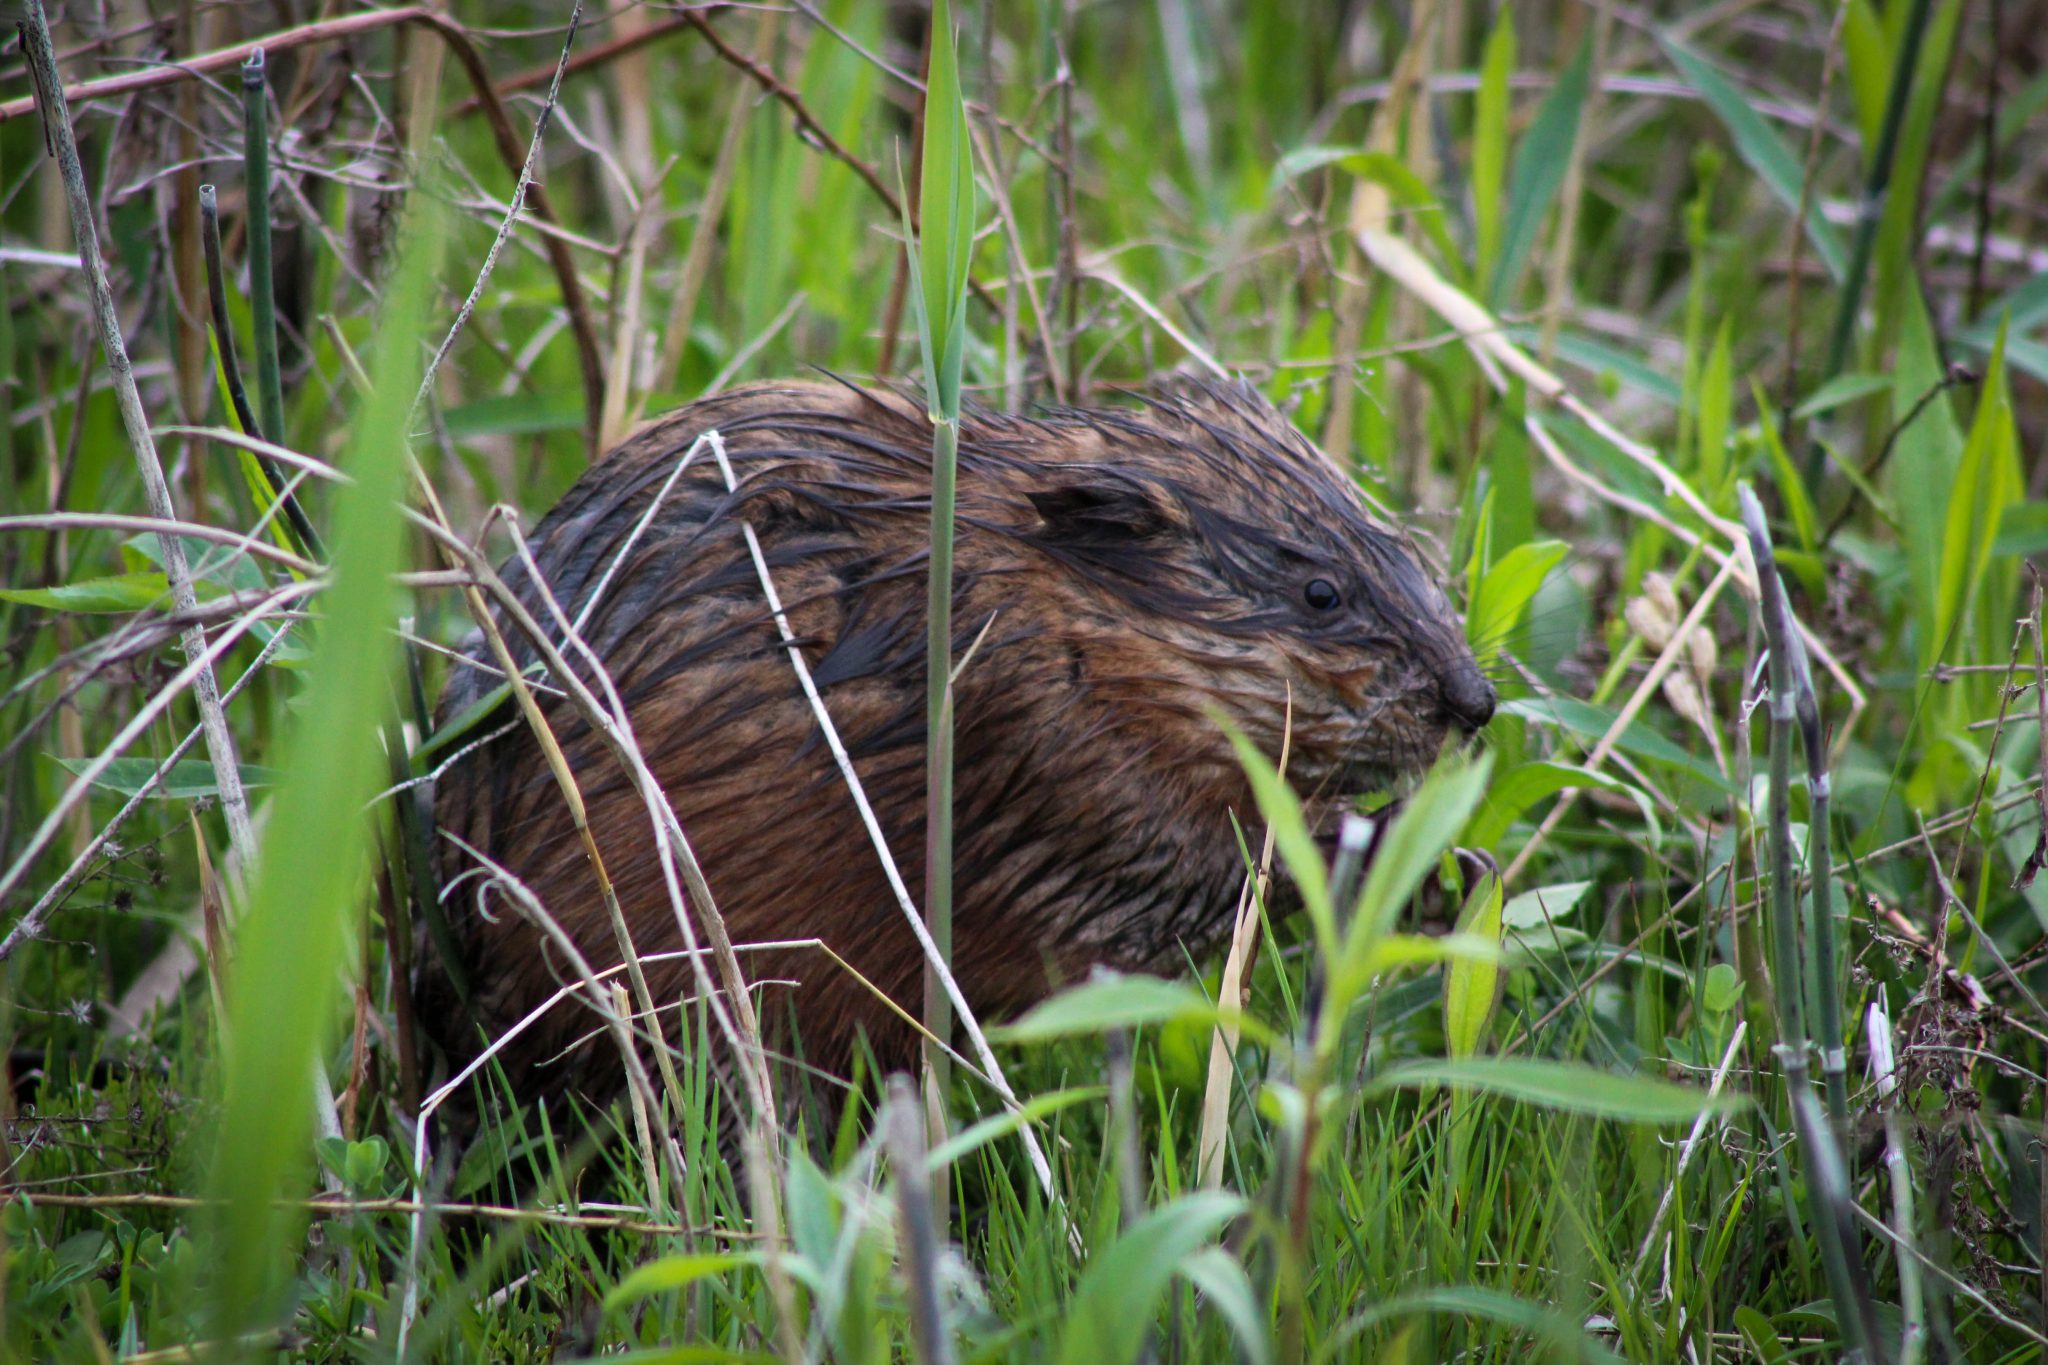 Juvenile beaver in grass